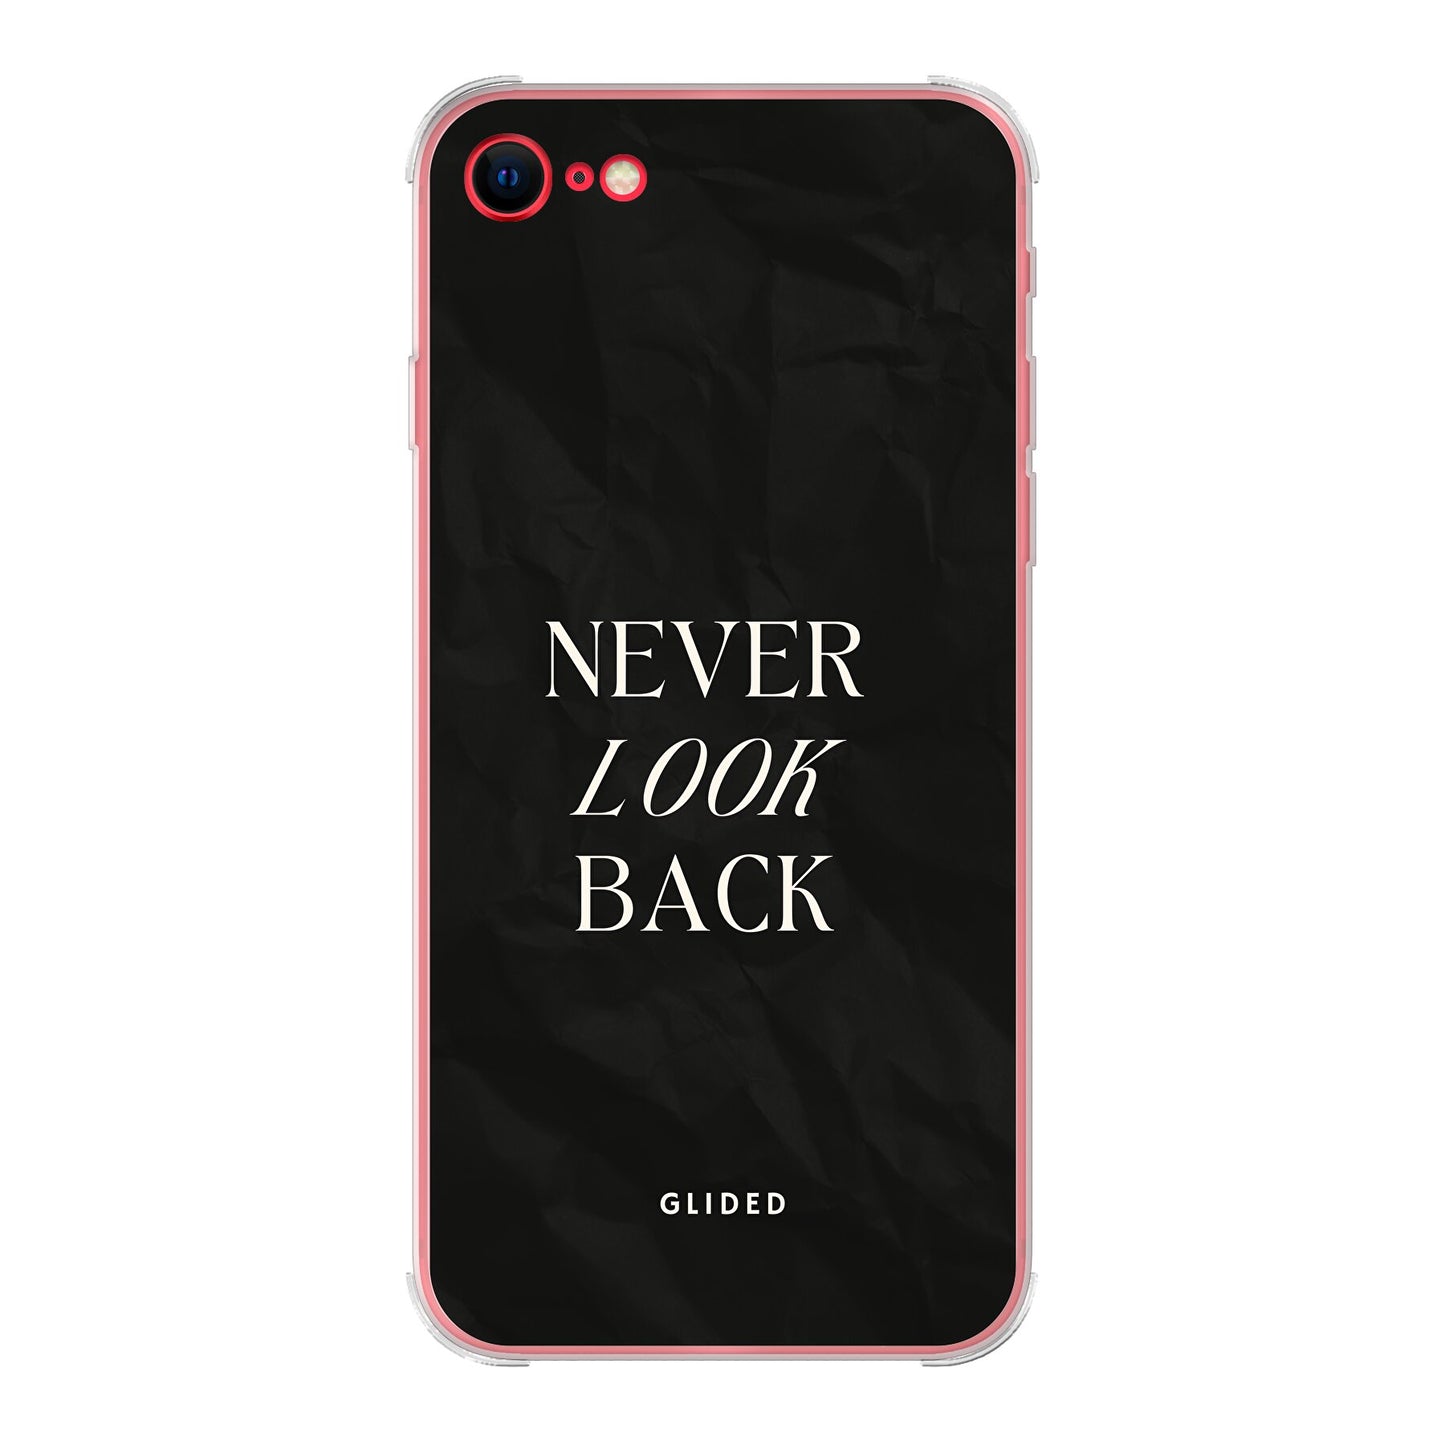 Never Back - iPhone 8 Handyhülle Bumper case